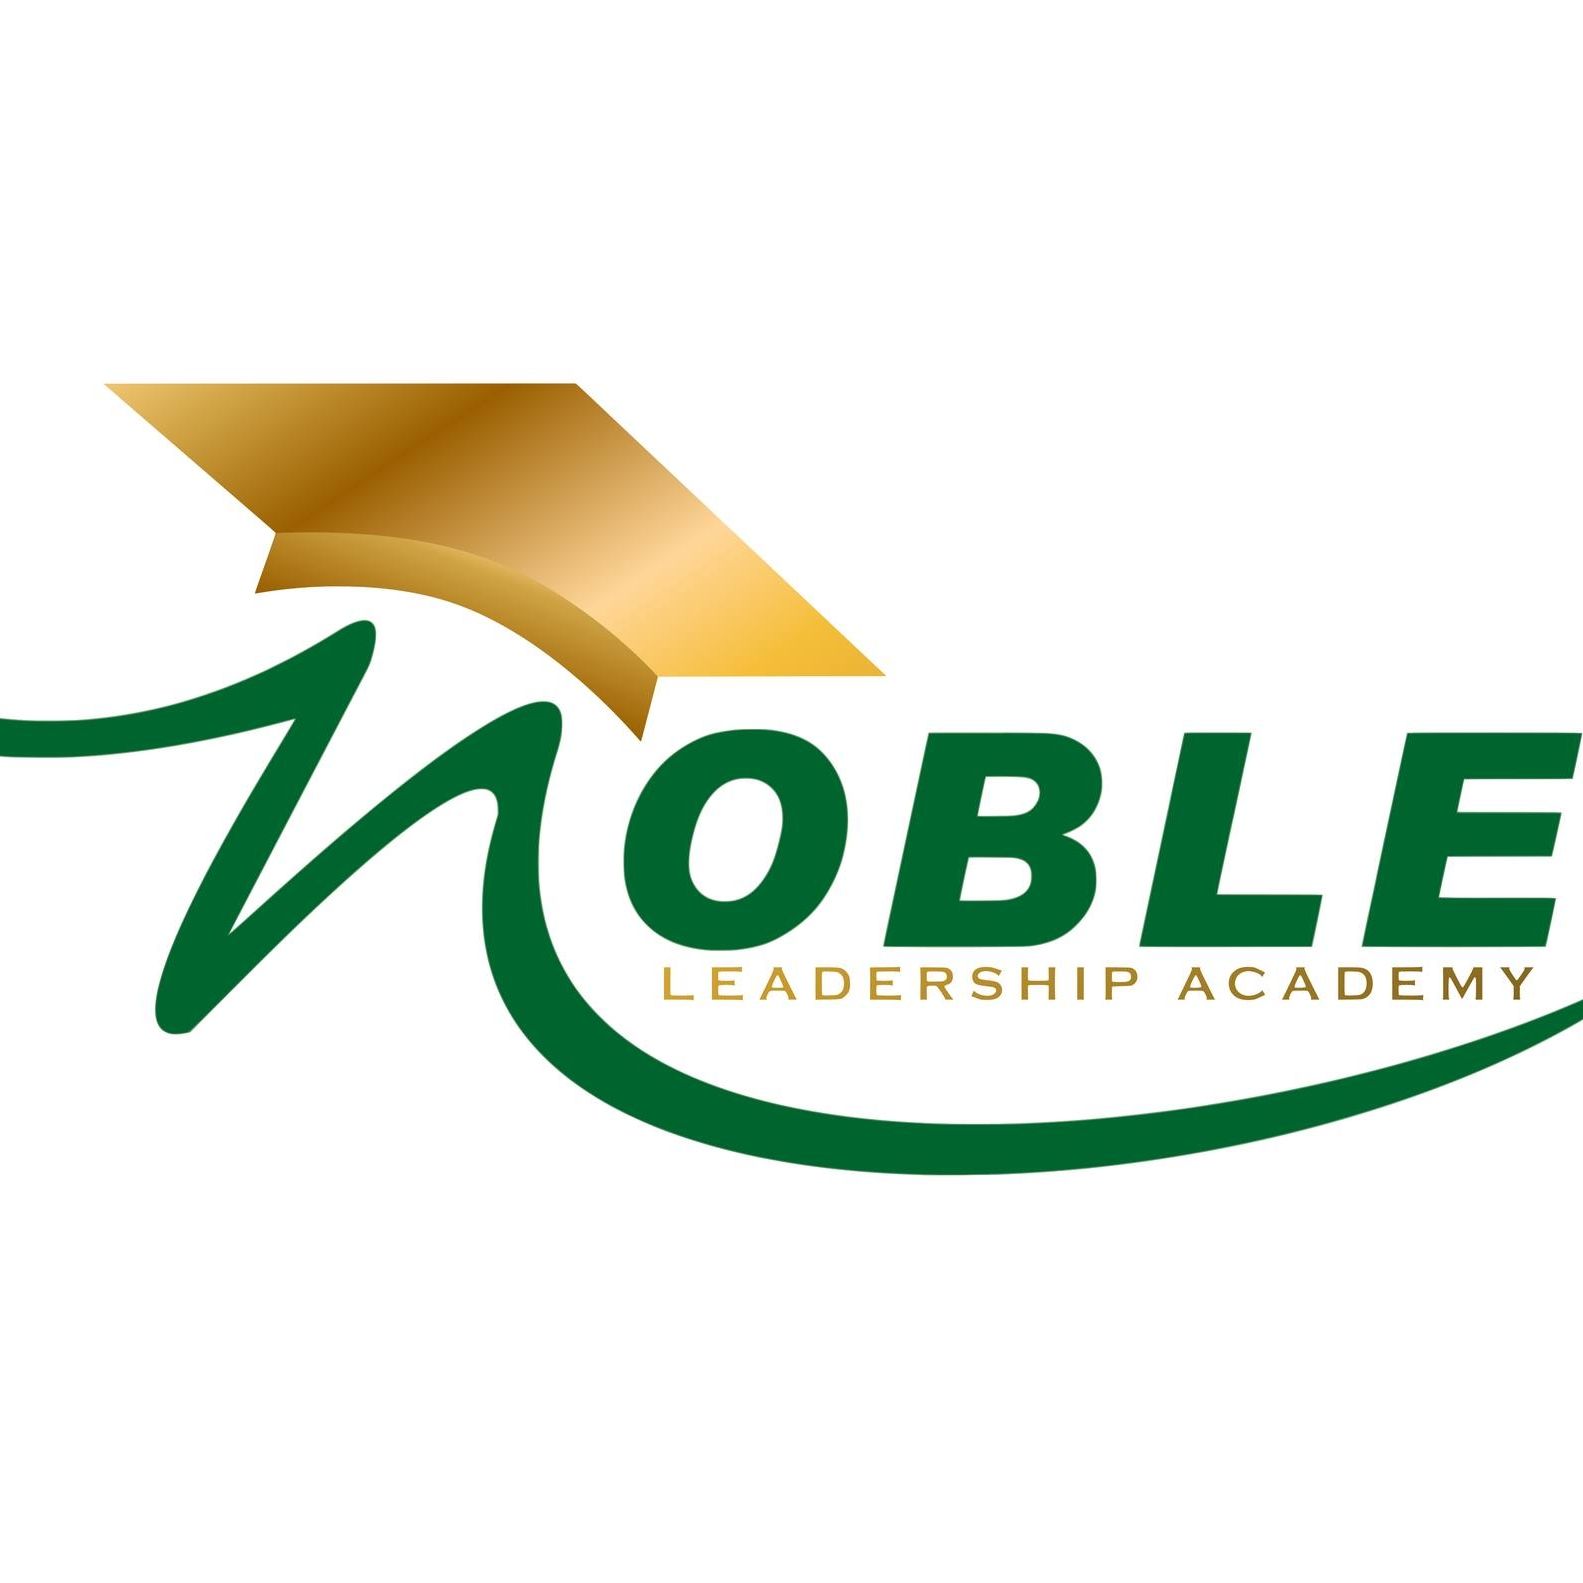 Noble Leadership Academy